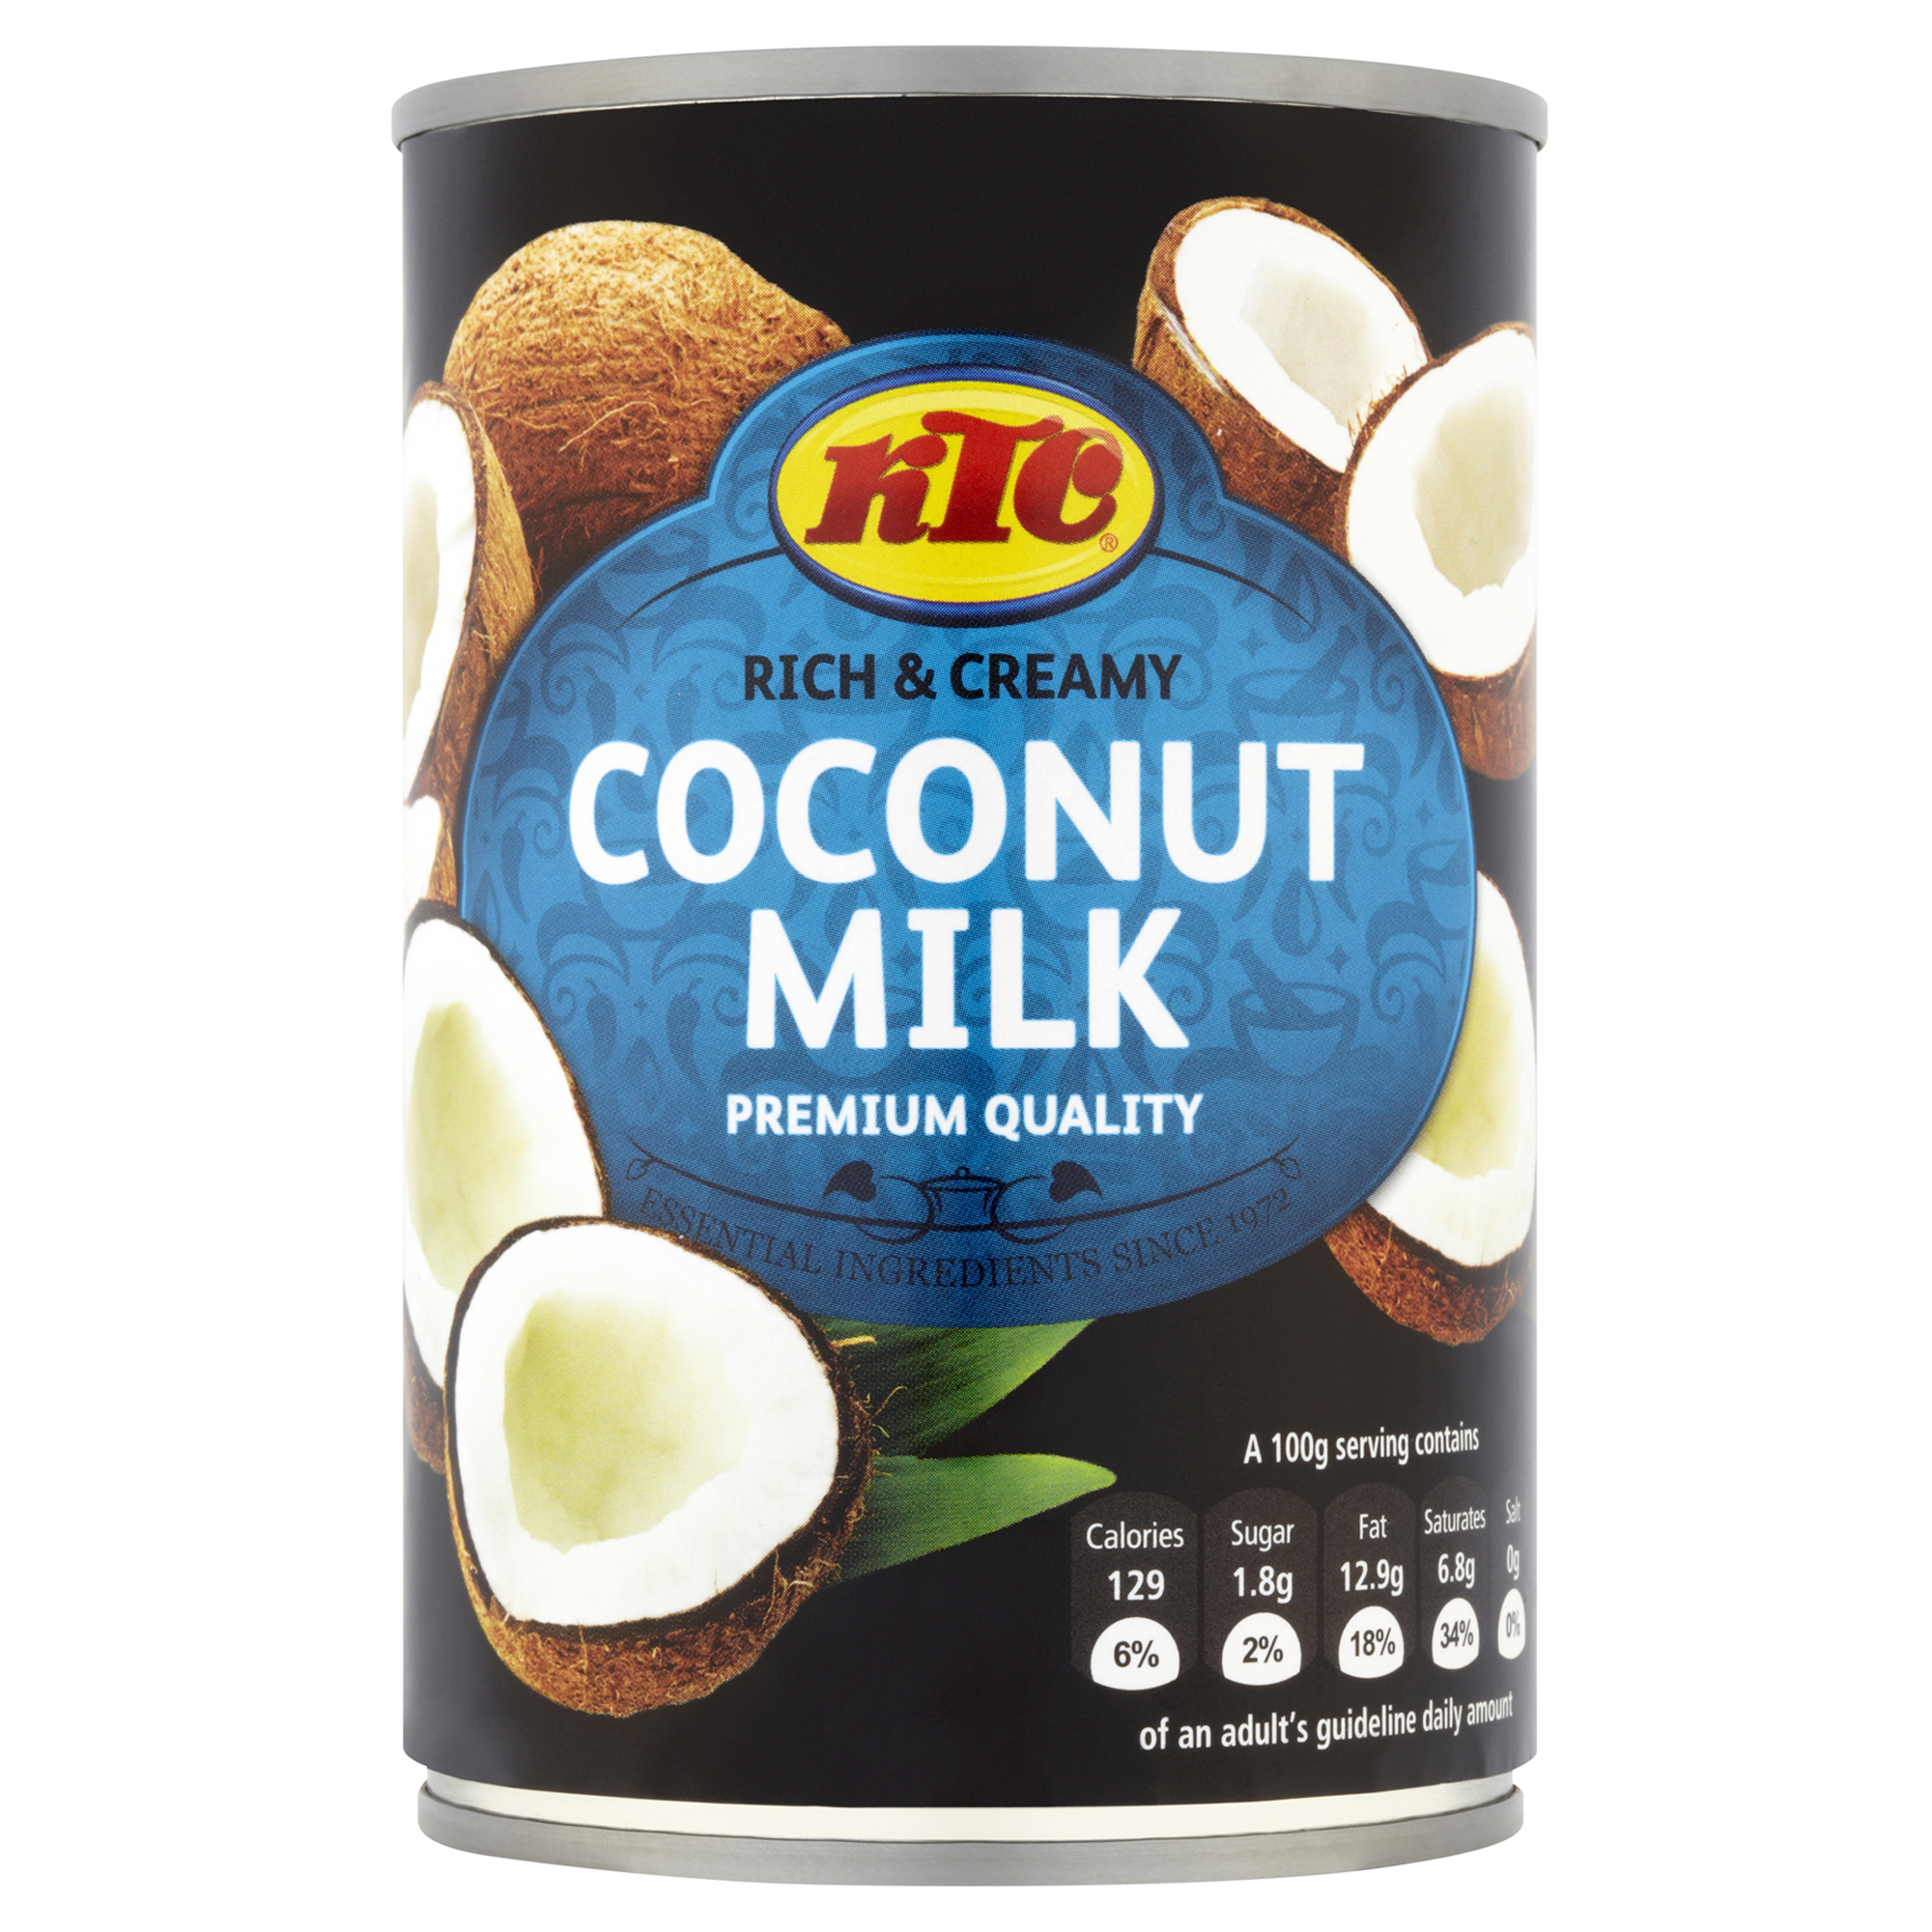 Grace Coconut Milk 18% fat 400g